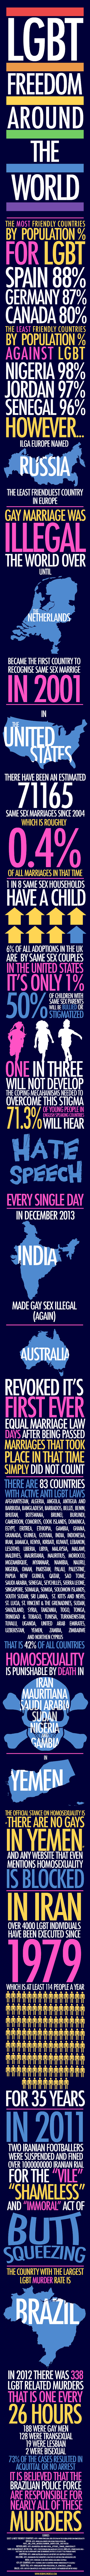 LGBT Freedom Around the World